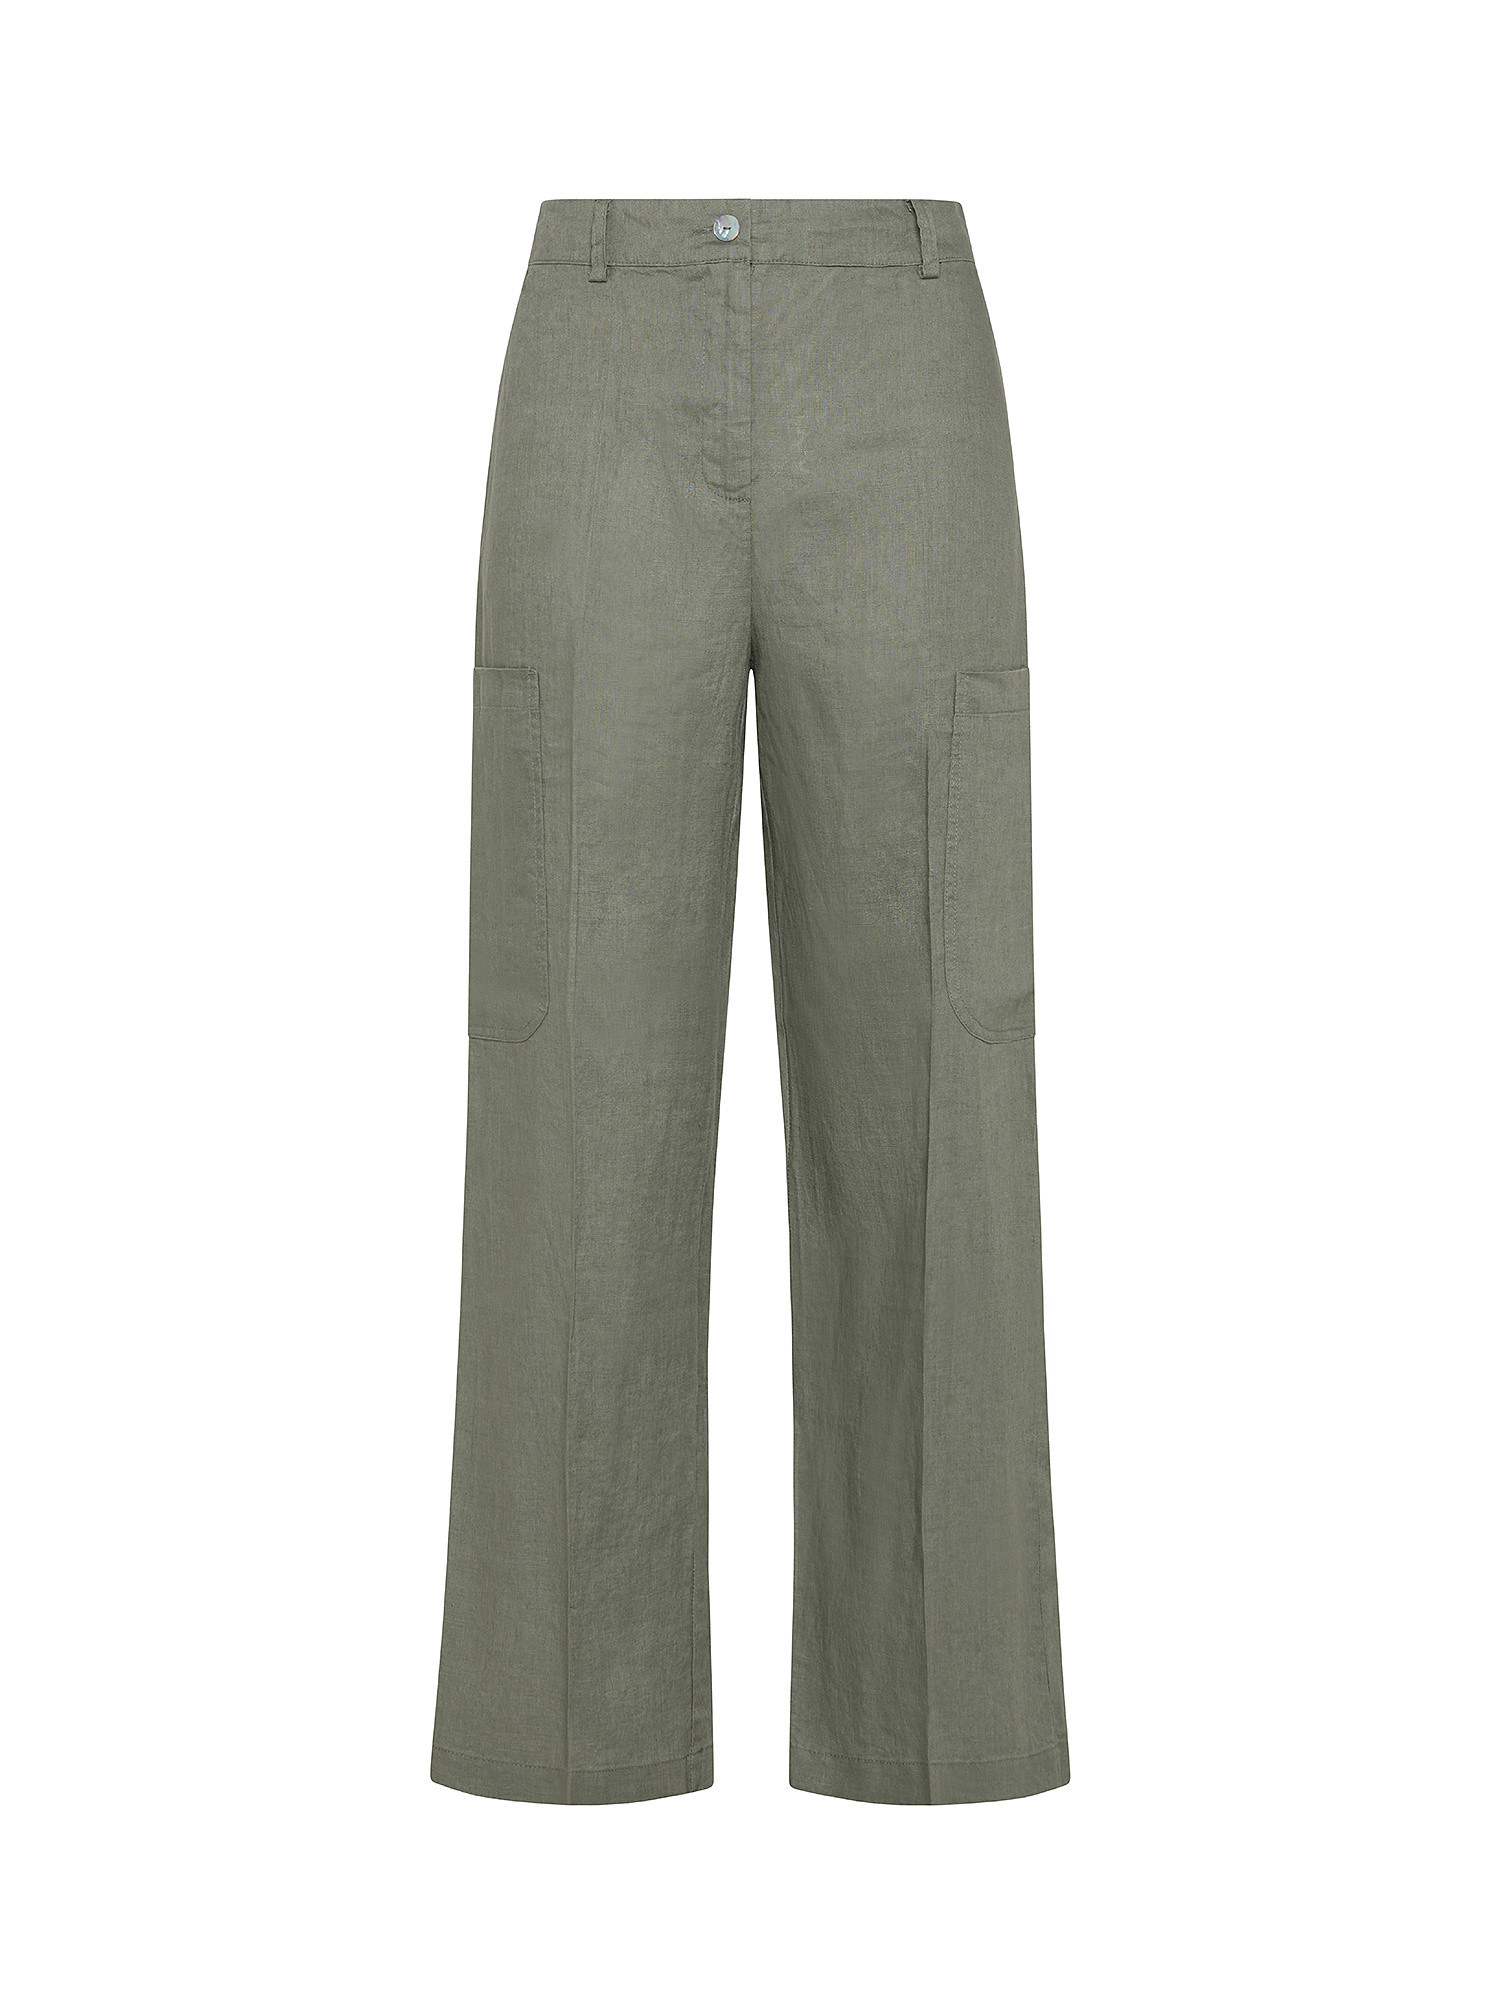 Koan - Linen cargo pants, Sage Green, large image number 0